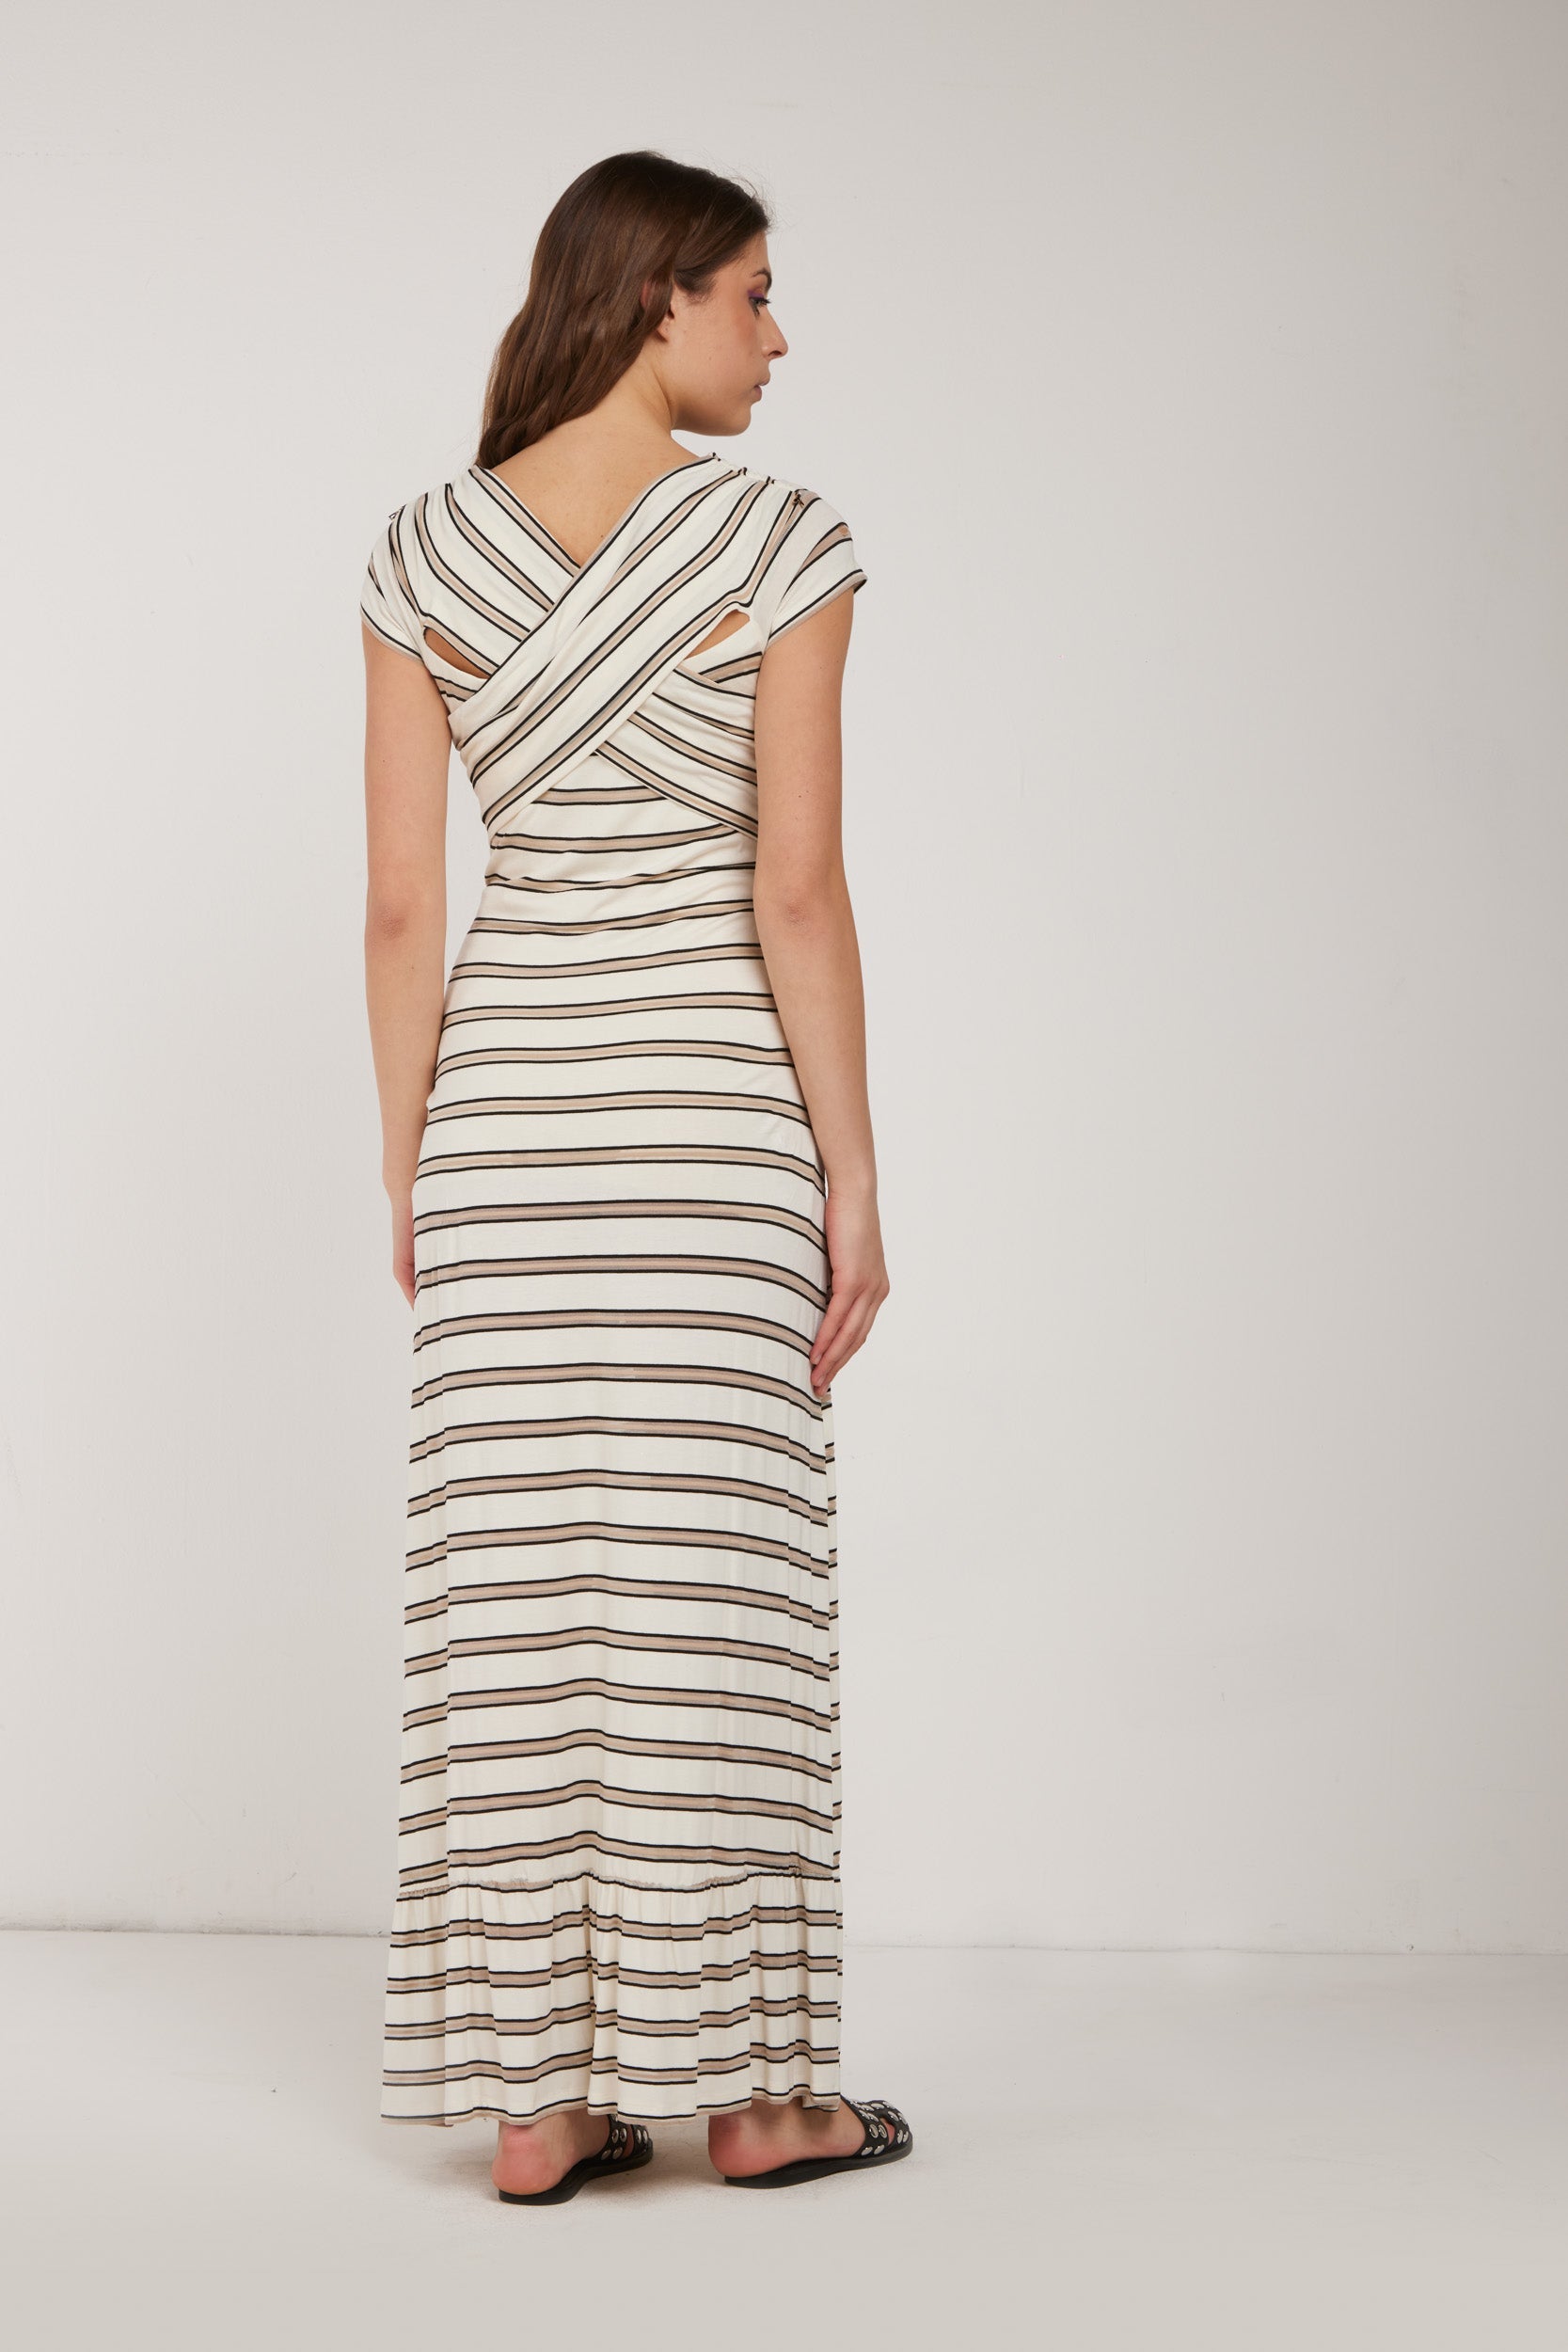 PATRIZIA PEPE White striped dress with Cross